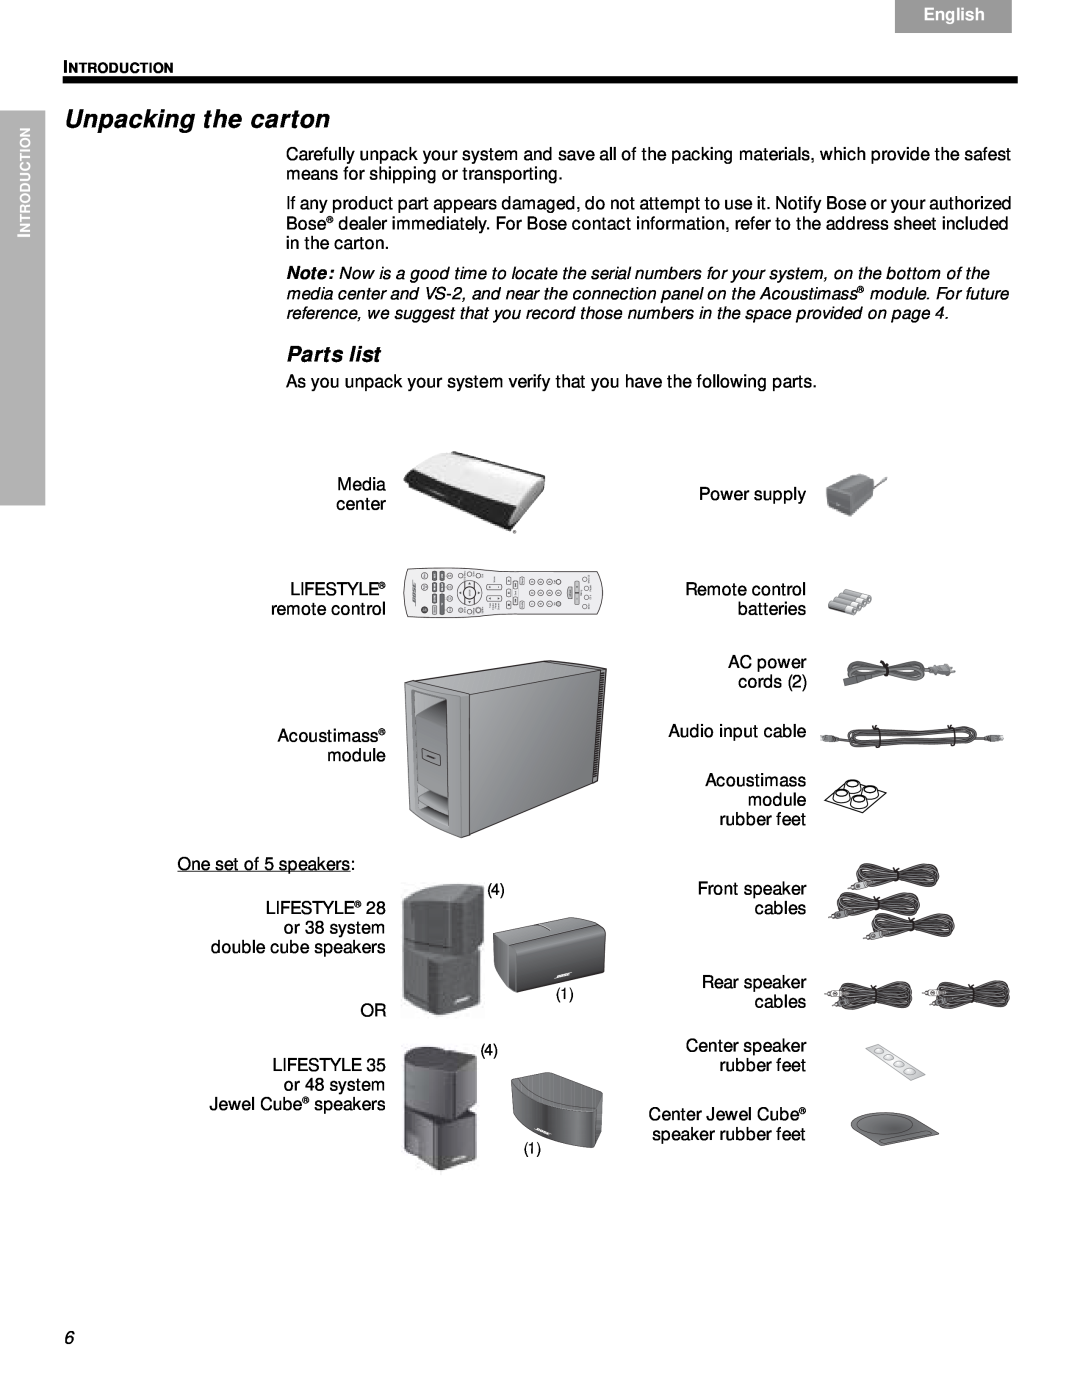 Bose VS-2 manual Unpacking the carton, Parts list, remote control, Nederlands, Svenska, English 